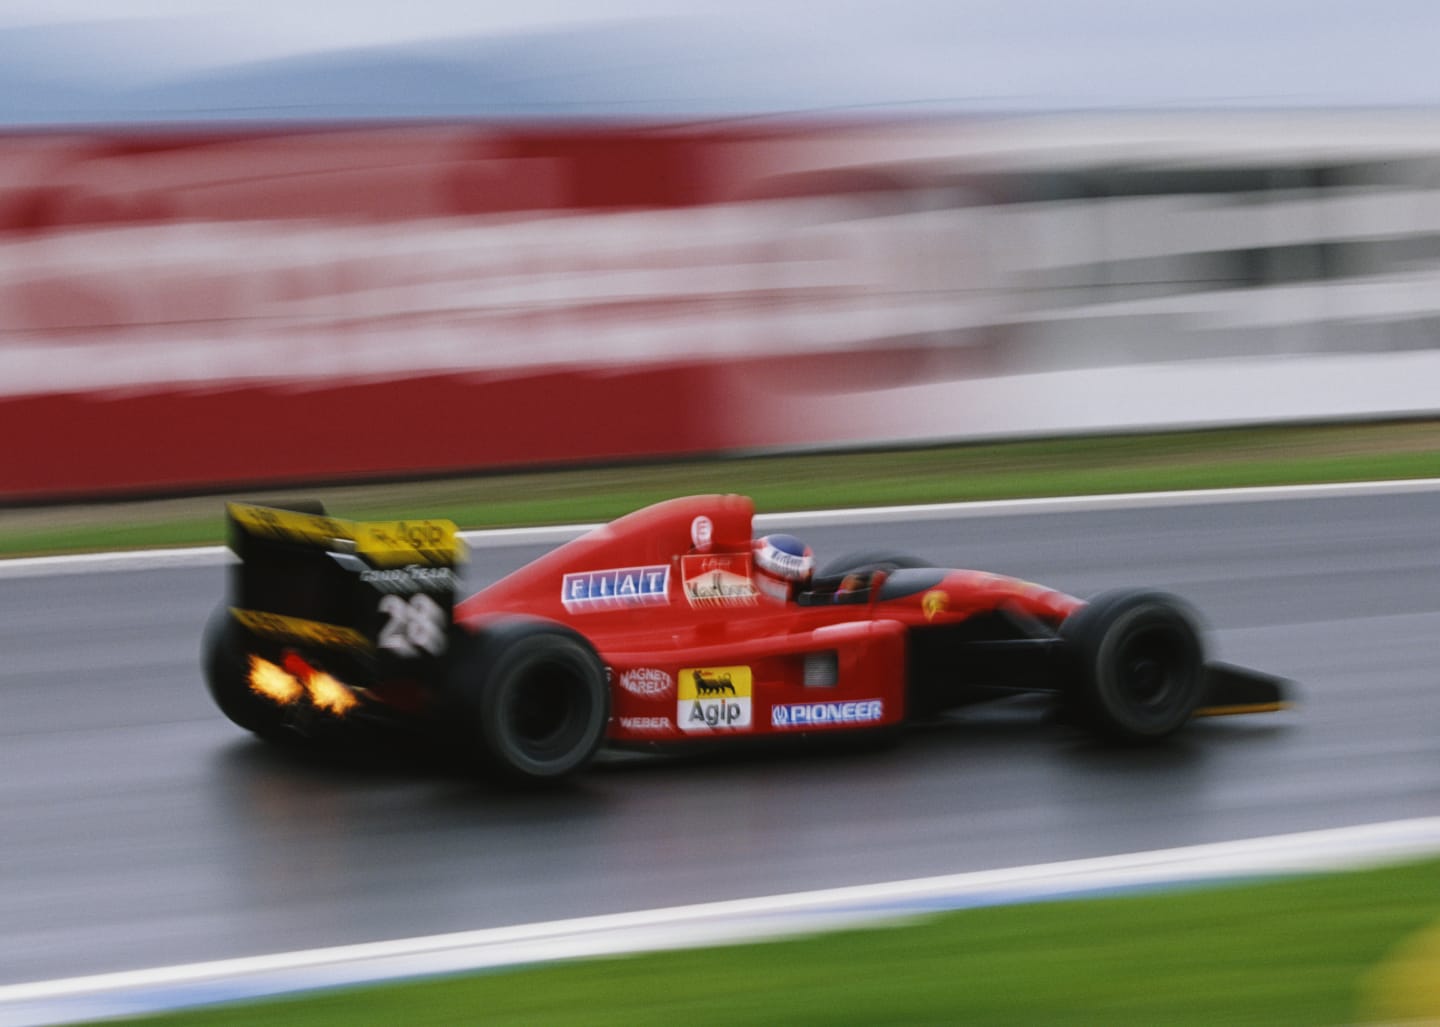 Jean Alesi of France managed three podiums for Ferrari in this turbulent season